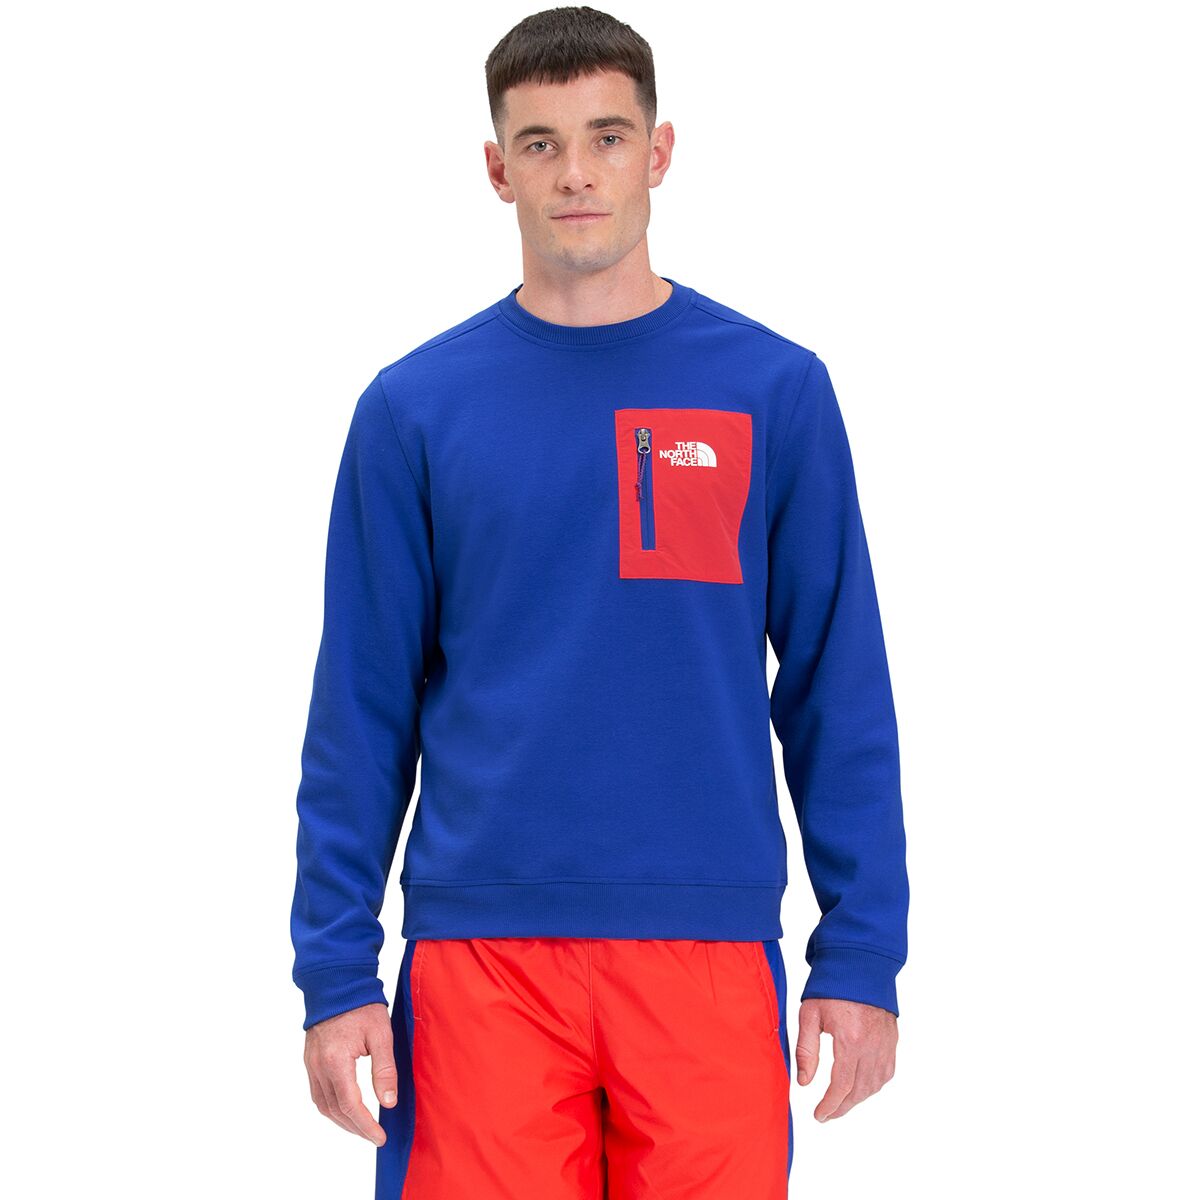 The North Face Tech Sweatshirt - Men's - Clothing